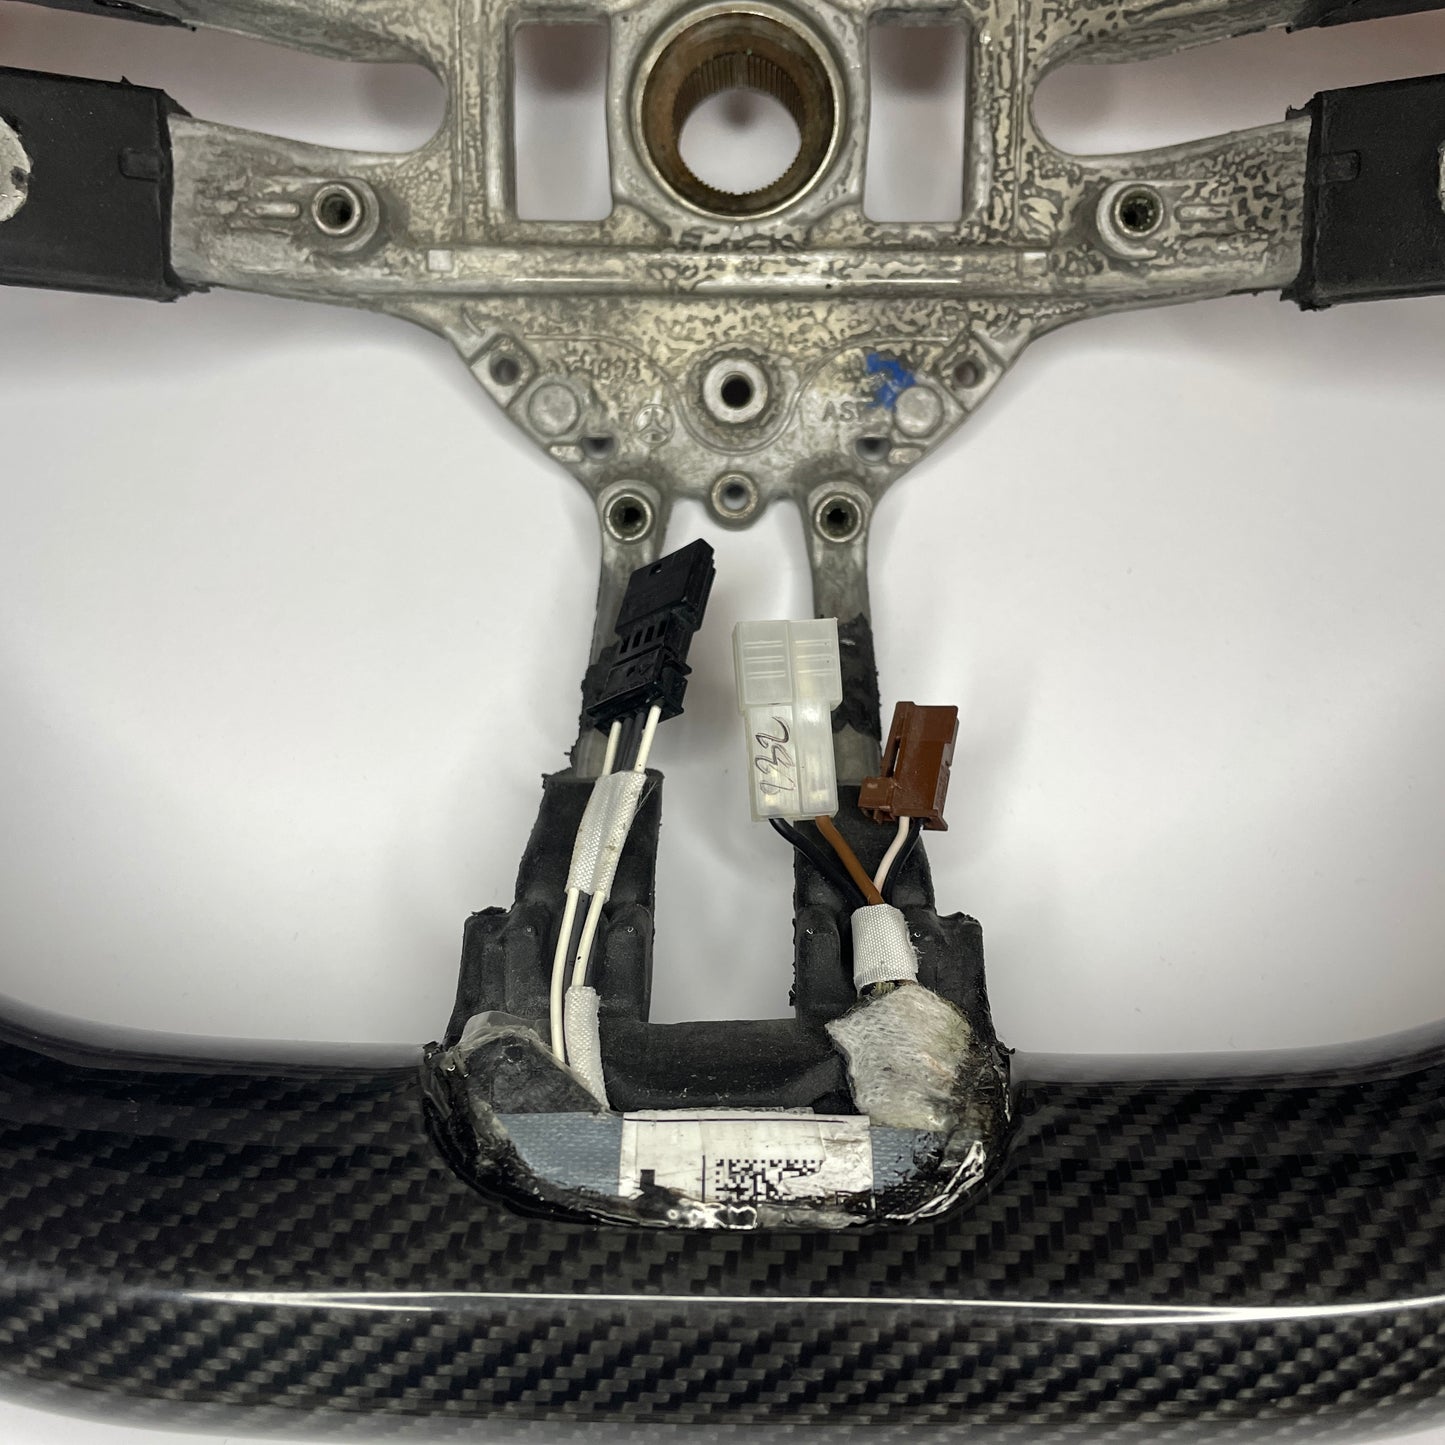 Mercedes-Benz Carbon Fiber Steering Wheel